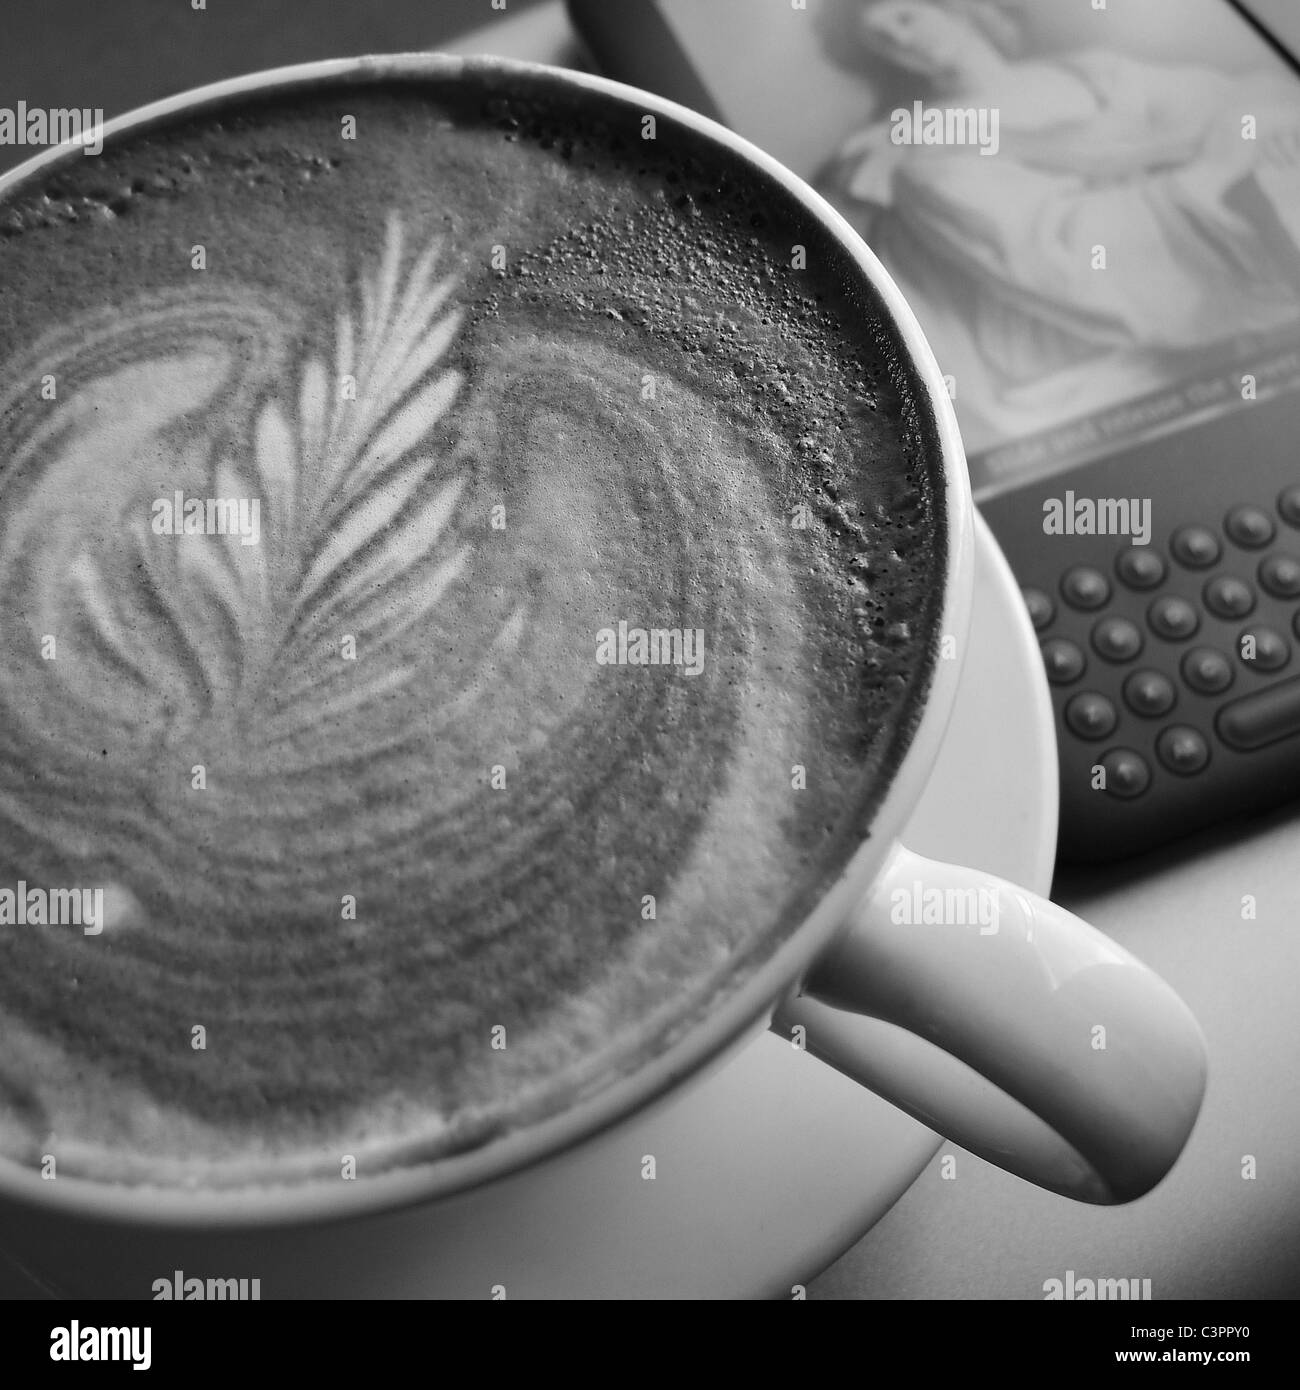 Cafe Latte mit Amazon Kindle. Stockfoto